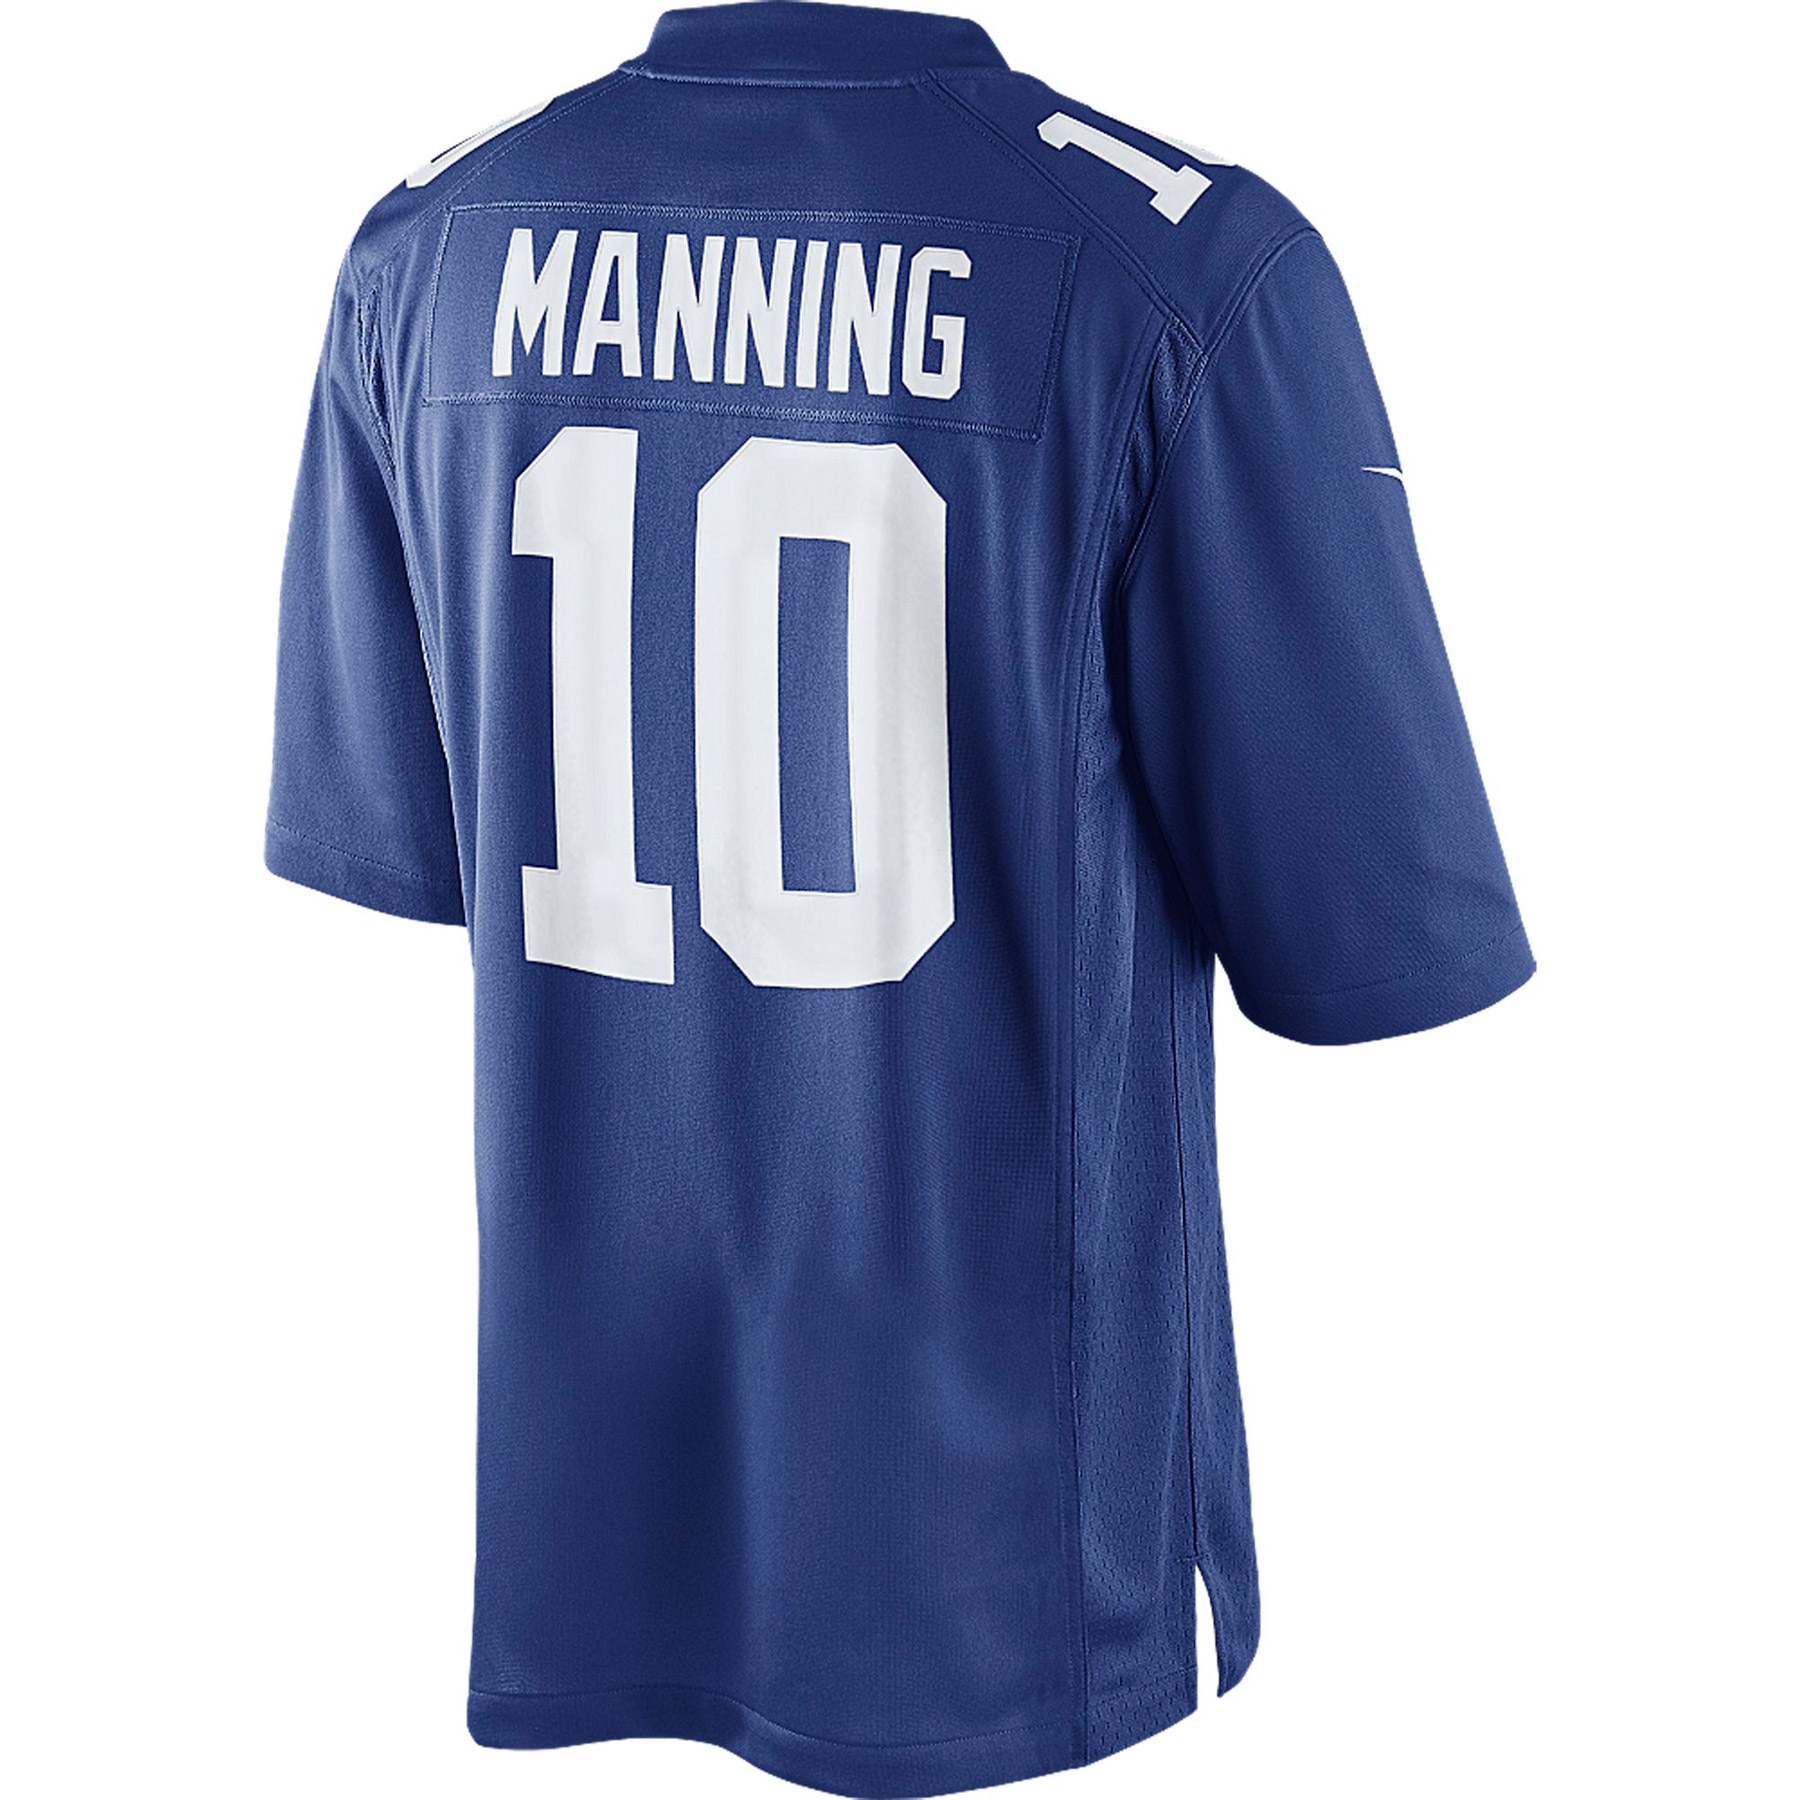 eli manning jersey shirt